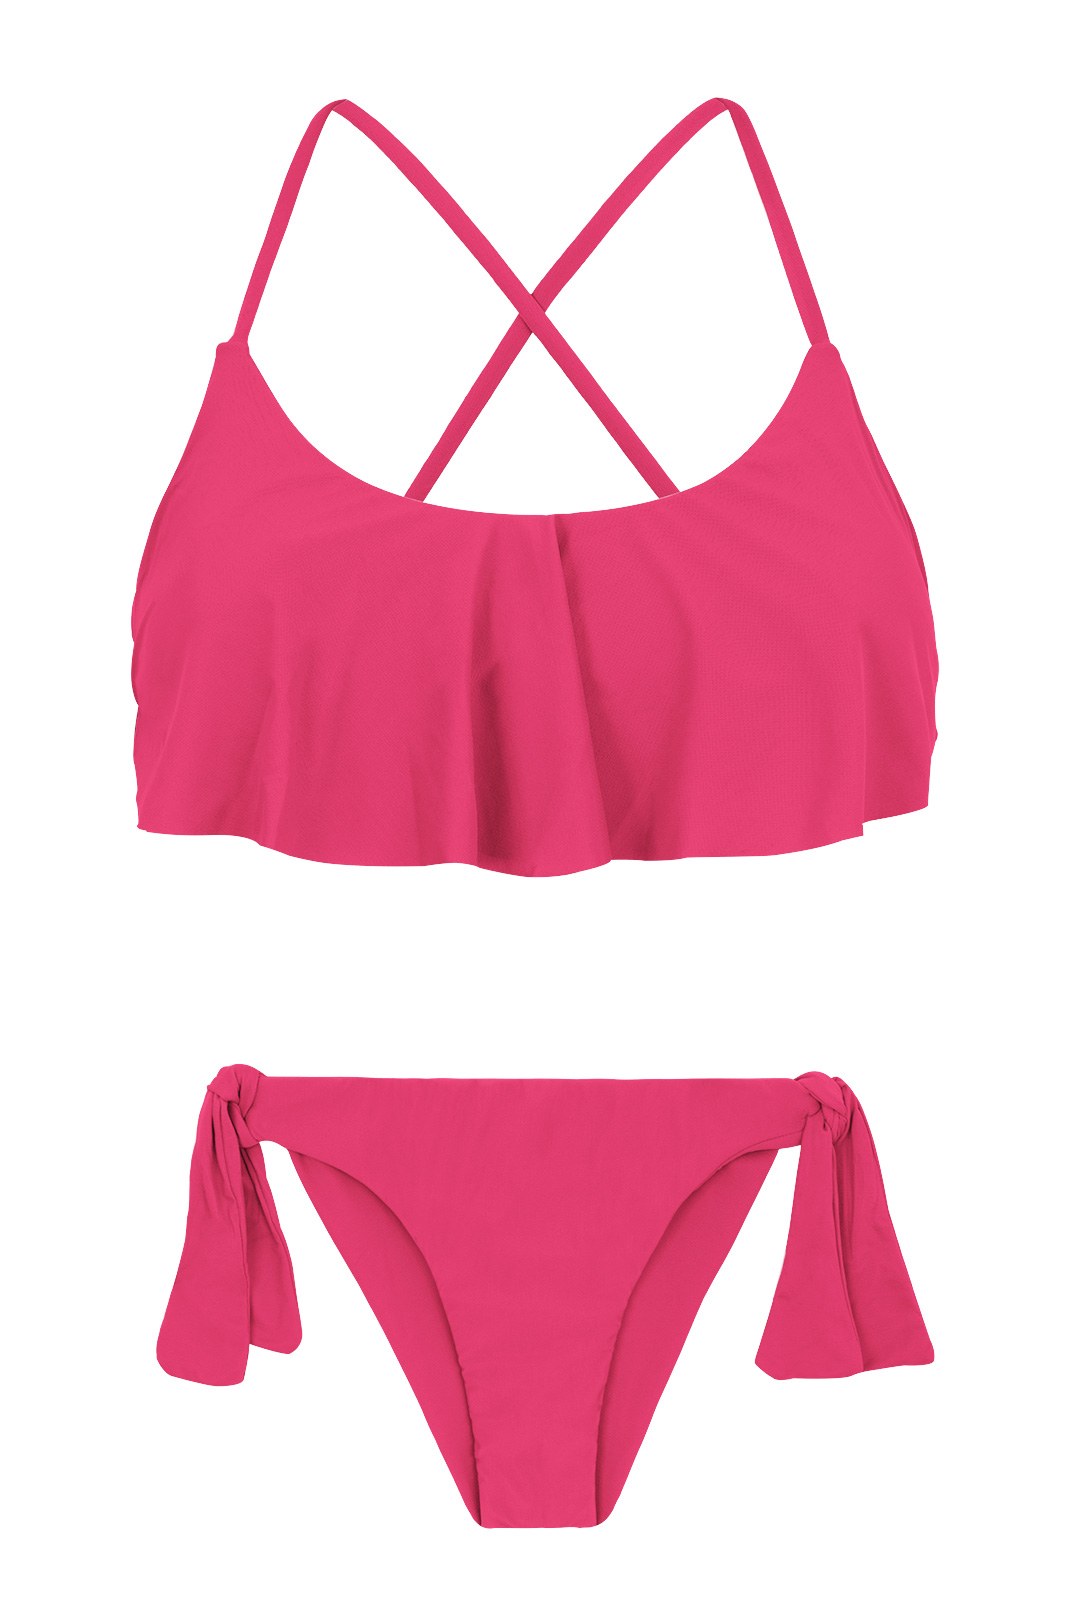 Back Crossed And Frilled Pink Fuchsia Bikini - Olinda Babado - Rio de Sol